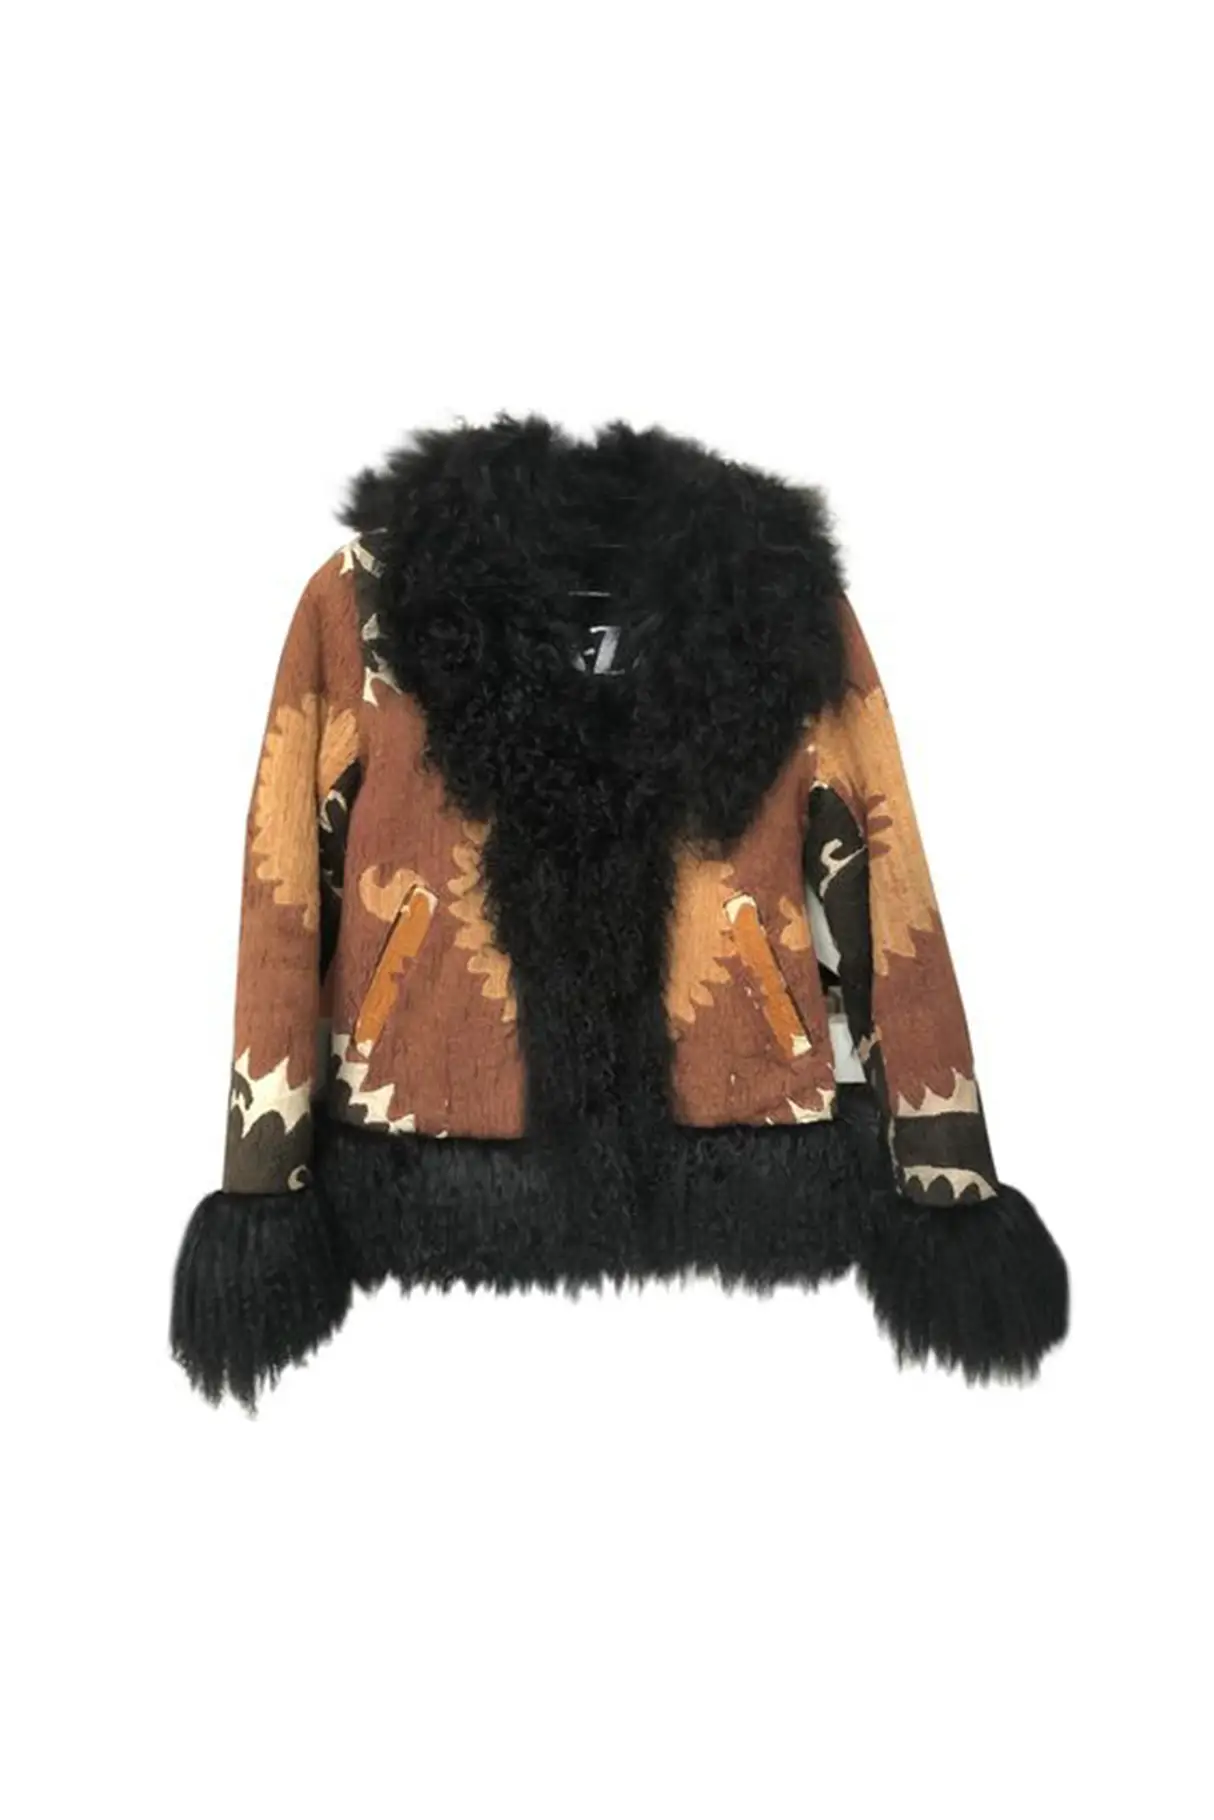 mongolian-black-fur-brown-coat-zazi-vintage-penny-lane-coat.jpg